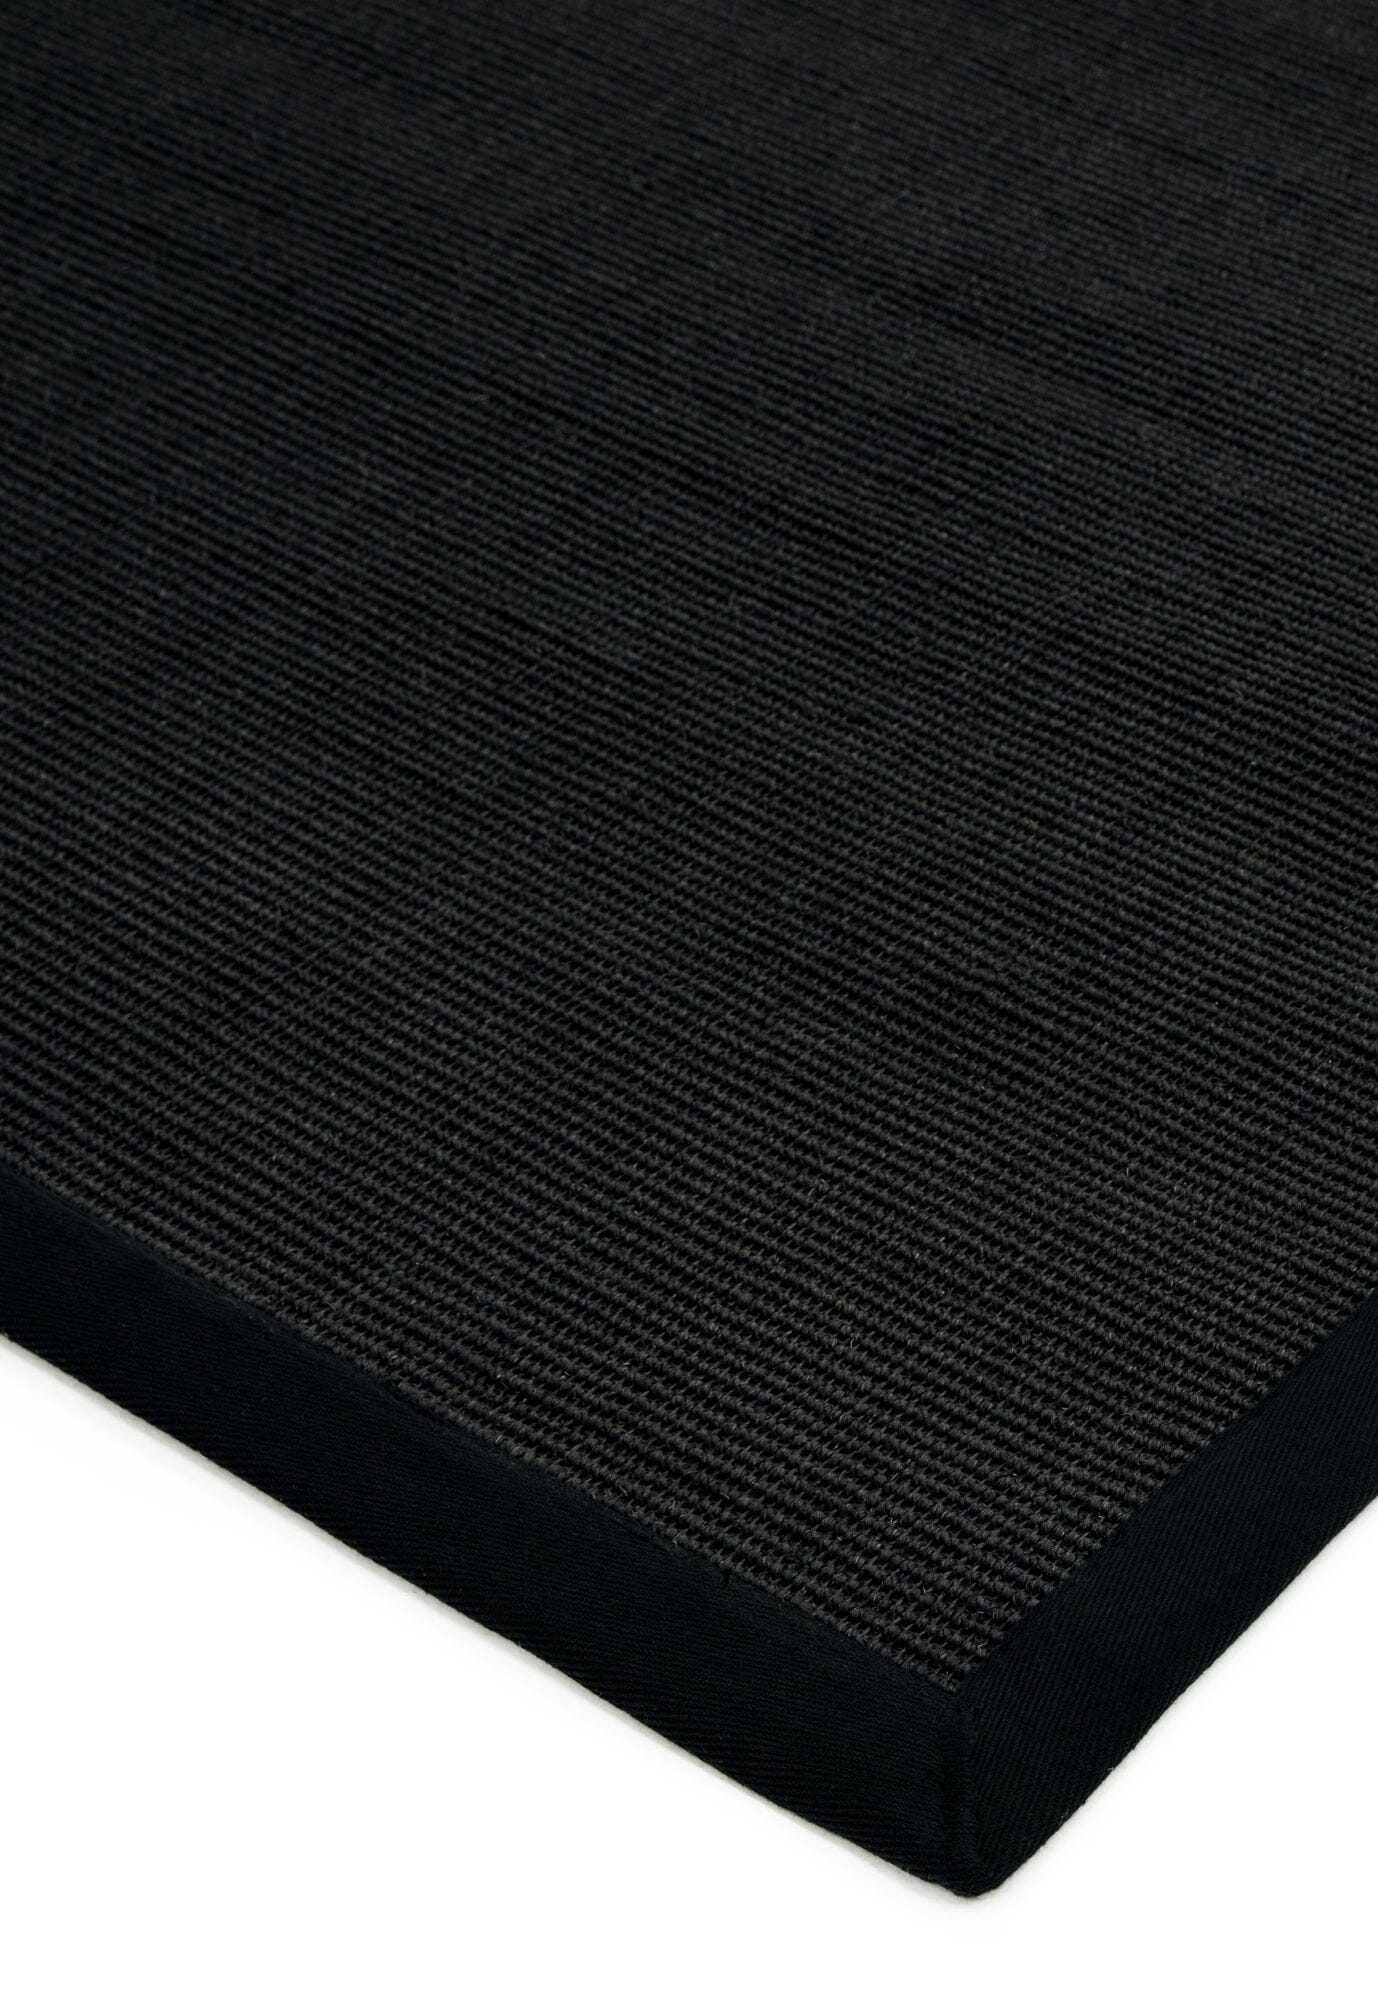 Asiatic Carpets Sisal Machine Woven Rug Black/Black - 68 x 300cm